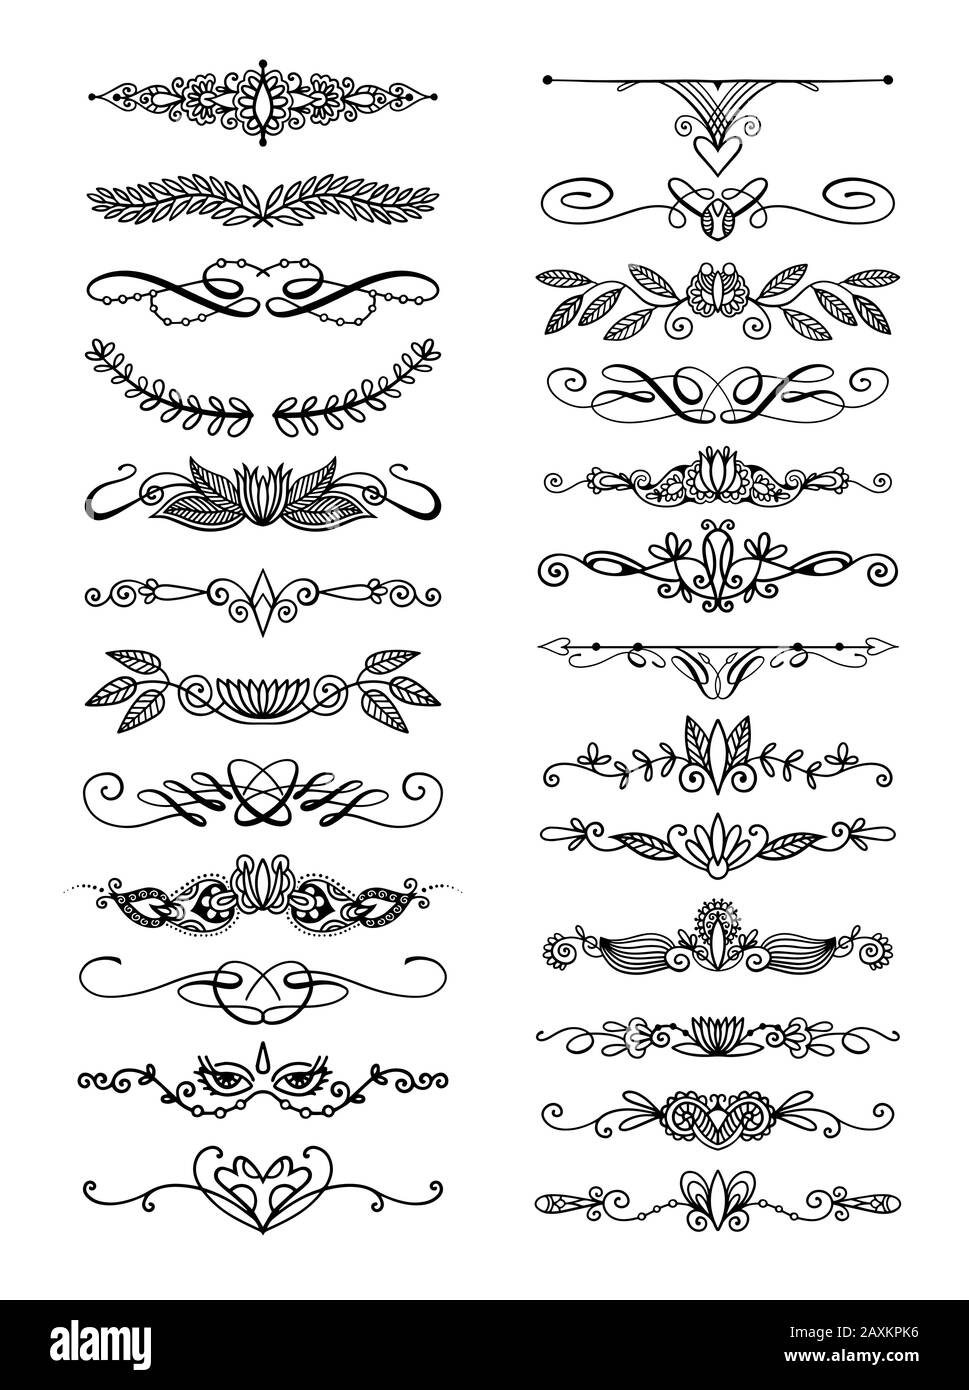 set of 25 doodle sketch drawing divider, wedding card design element or  page decoration | Stock vector | Colourbox